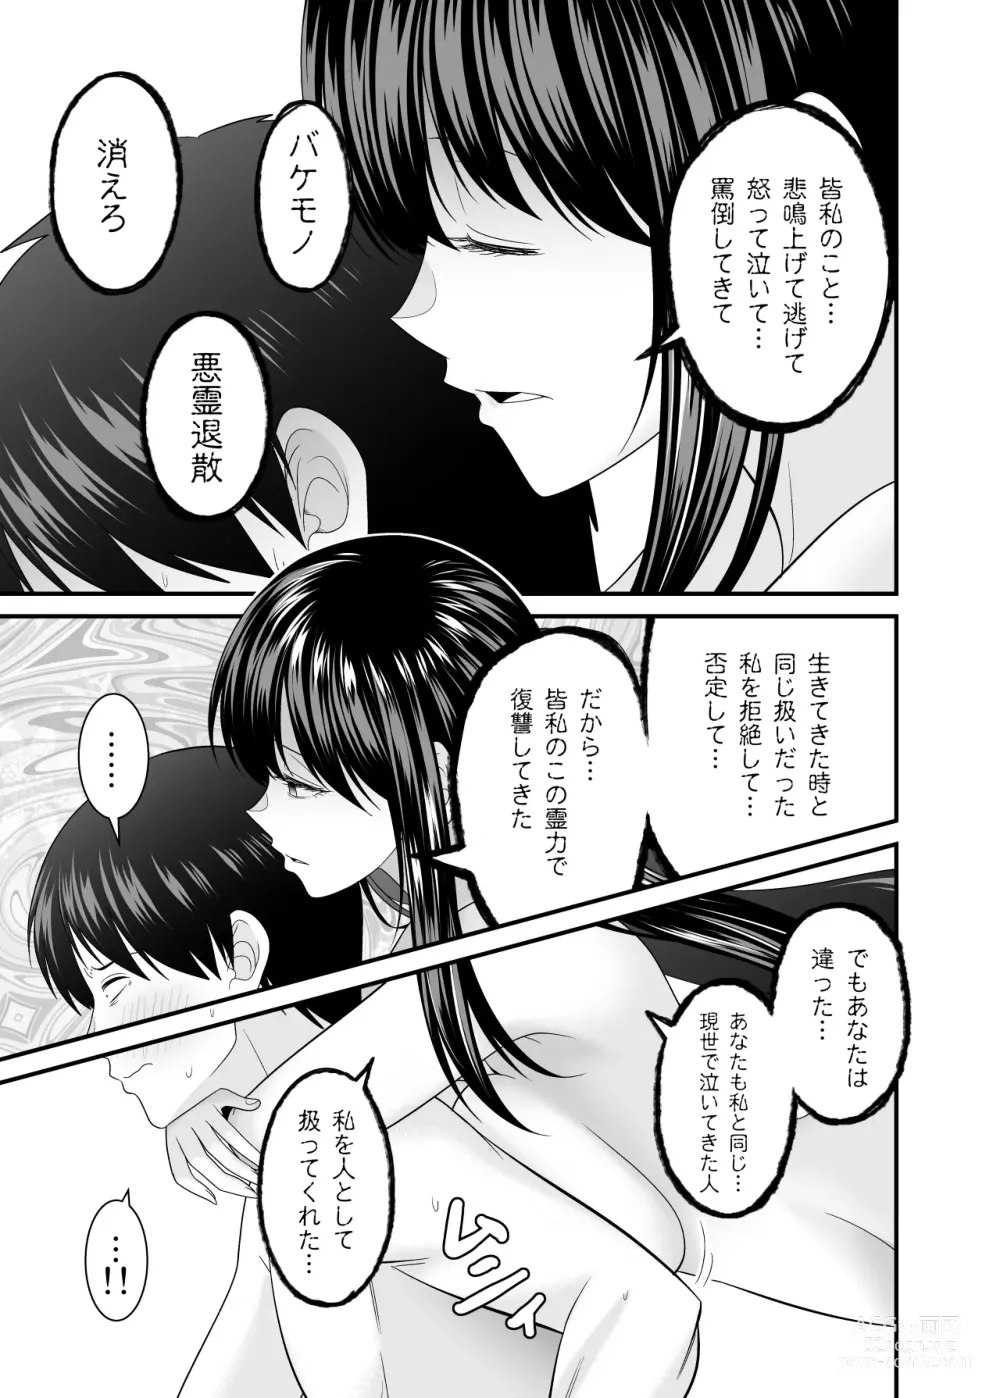 Page 48 of doujinshi ヤバい事故物件に女幽霊が出たけど無職底辺の俺はセックスしまくる